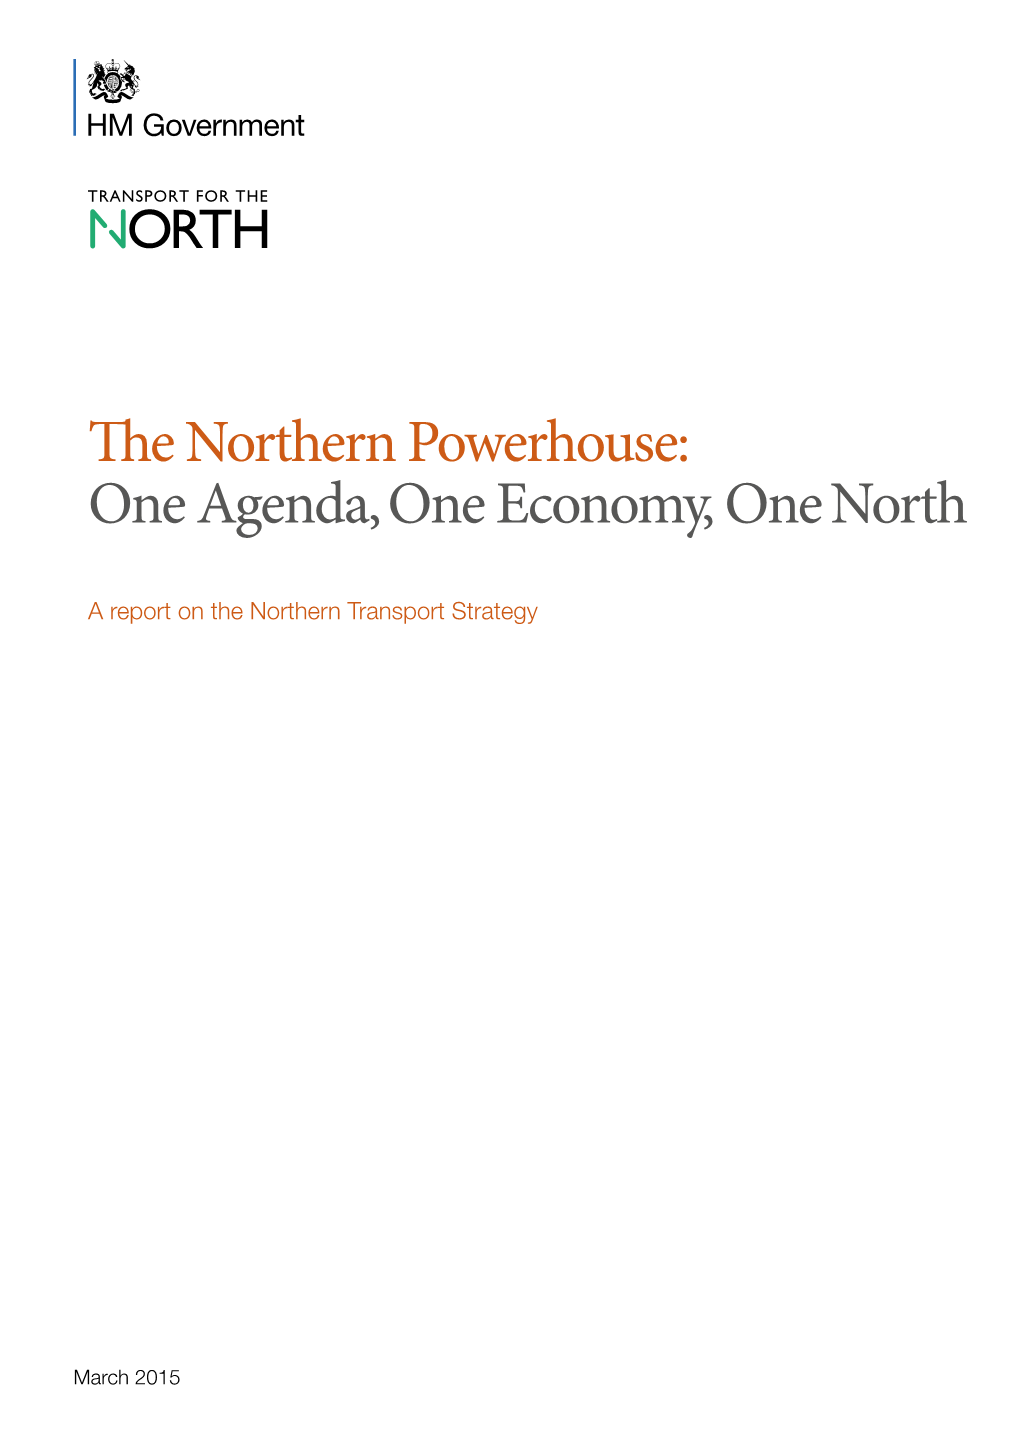 The Northern Powerhouse: One Agenda, One Economy, One North